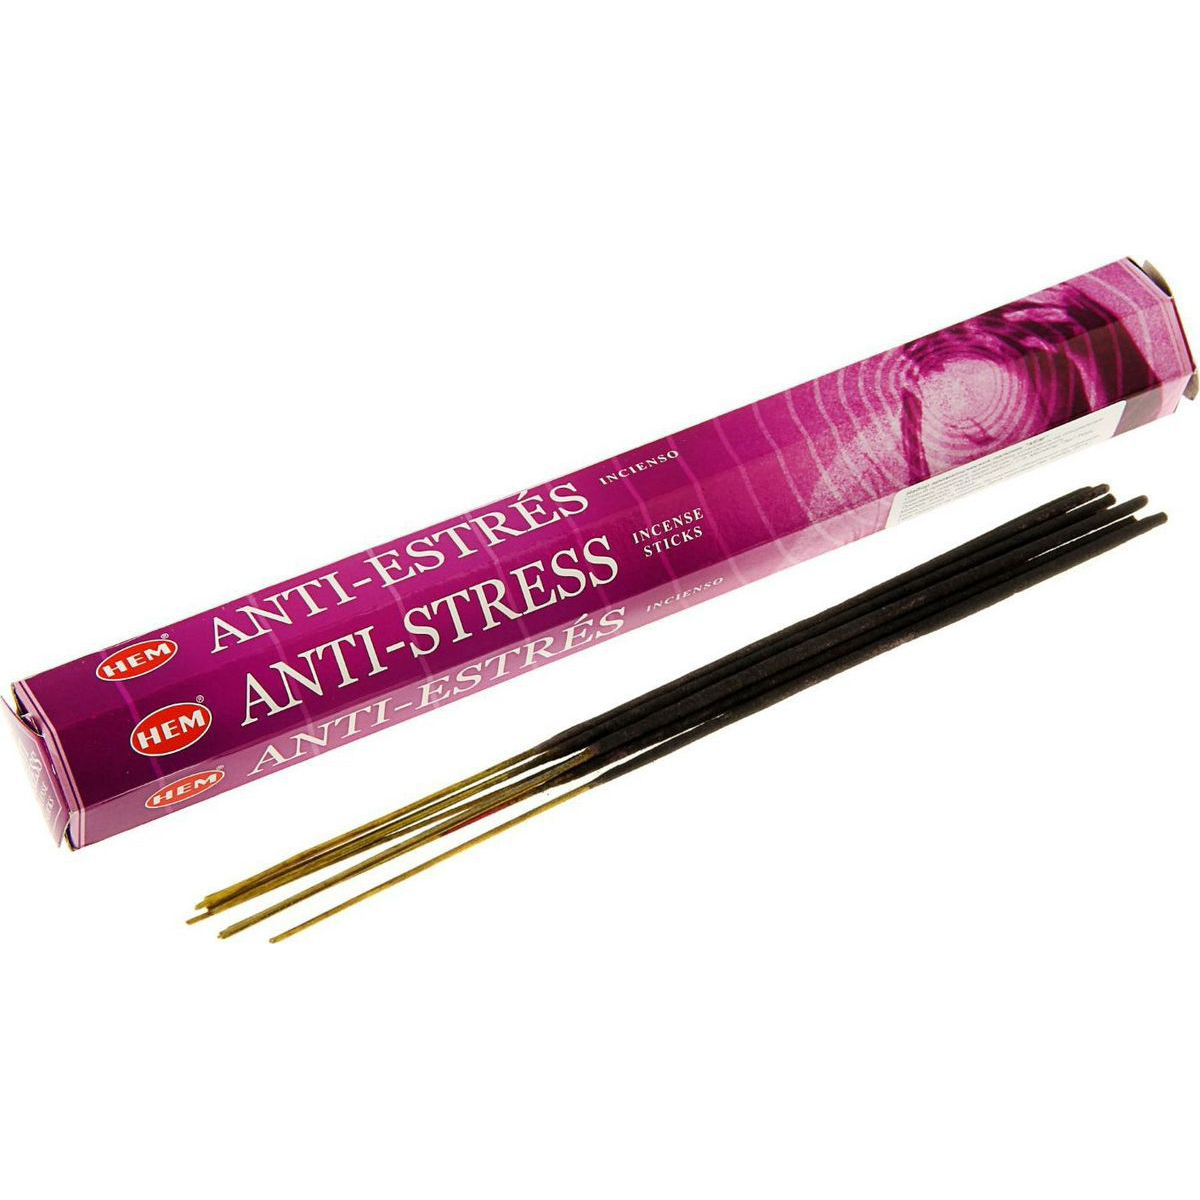 Hem Incense Sticks ANTI-STRESS (Благовония АНТИСТРЕСС, Хем), уп. 20 палочек.